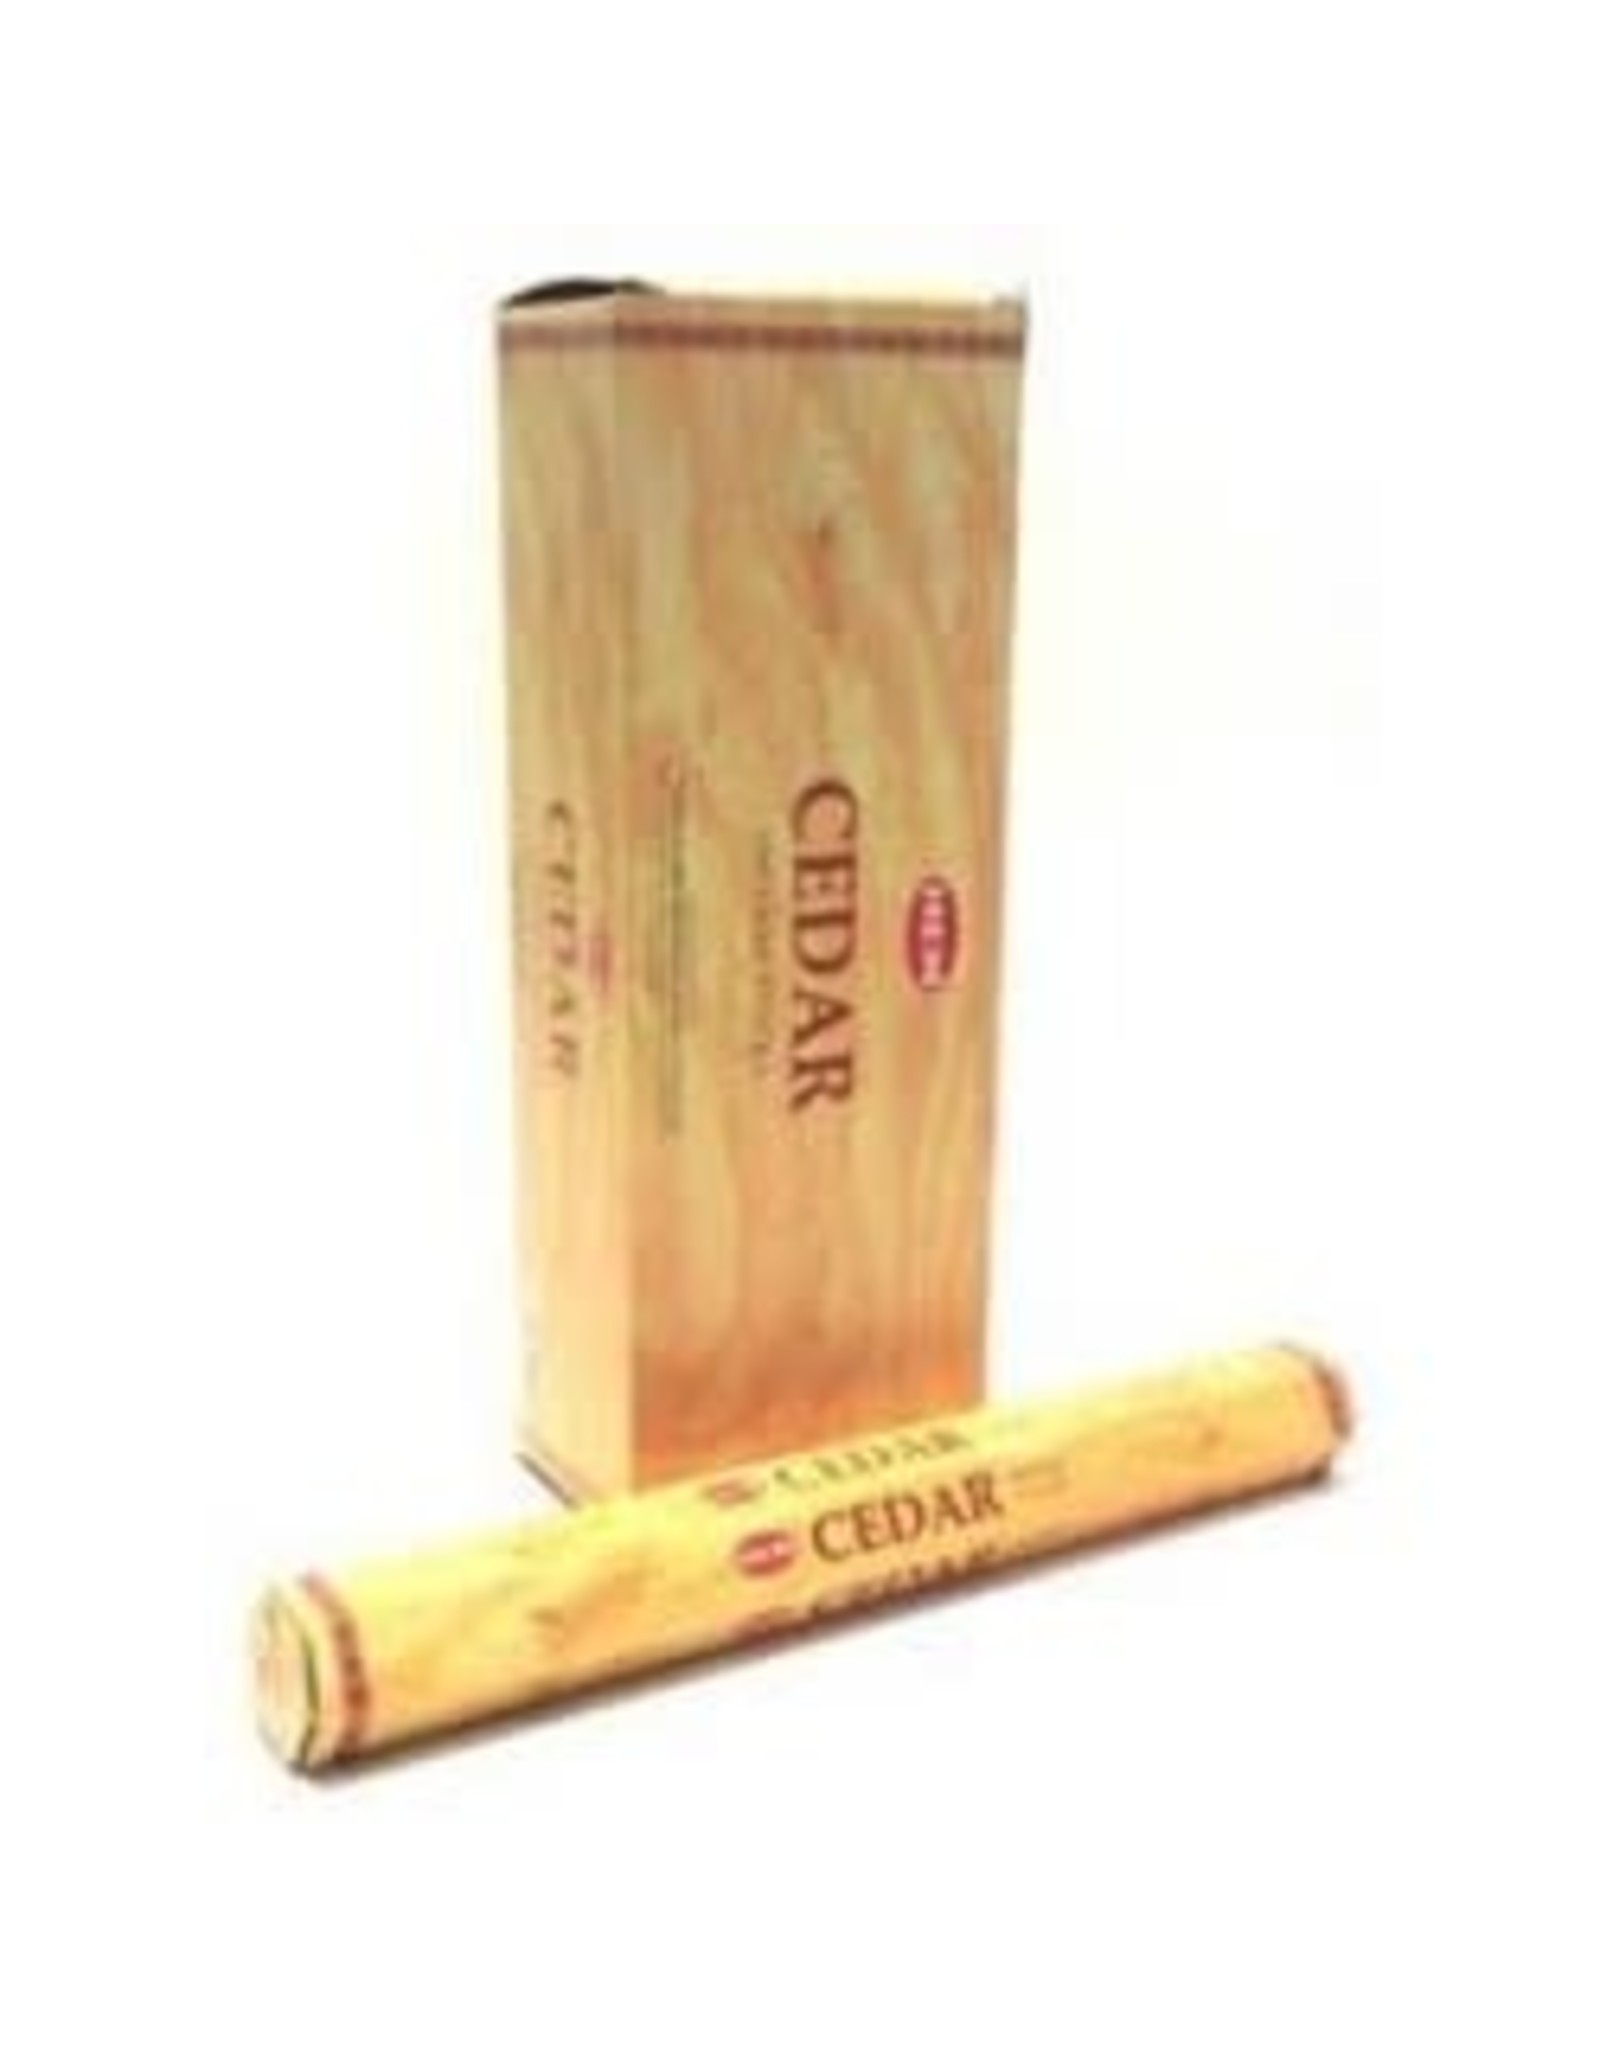 Hem Cedar  Incense Sticks  x20